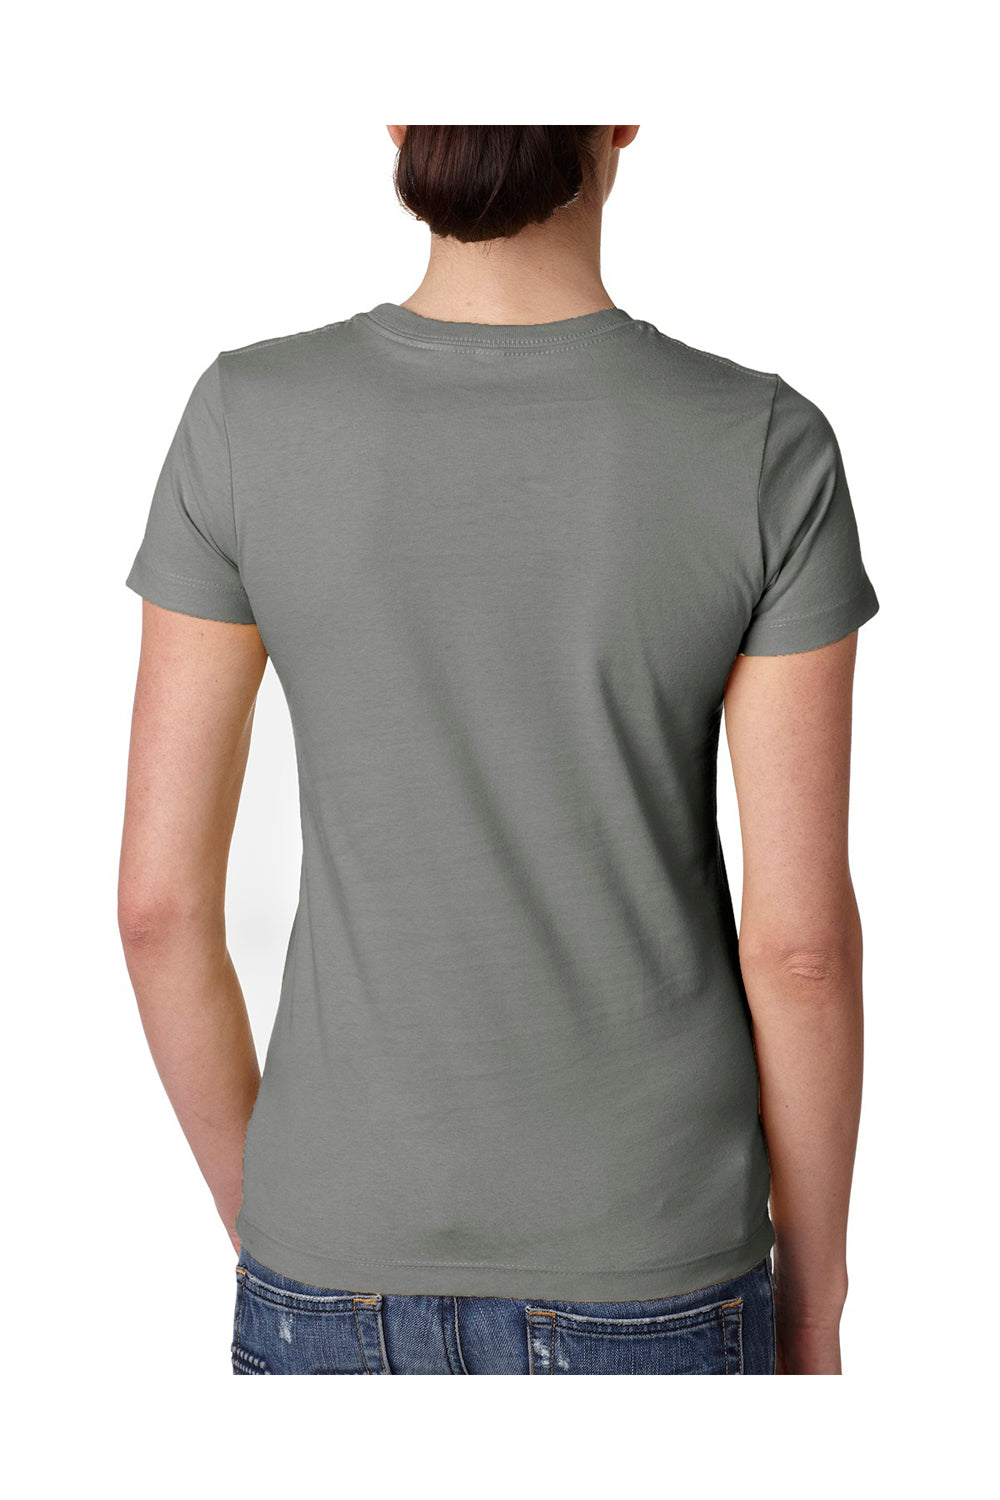 Next Level N3900 Womens Boyfriend Fine Jersey Short Sleeve Crewneck T-Shirt Warm Grey Back